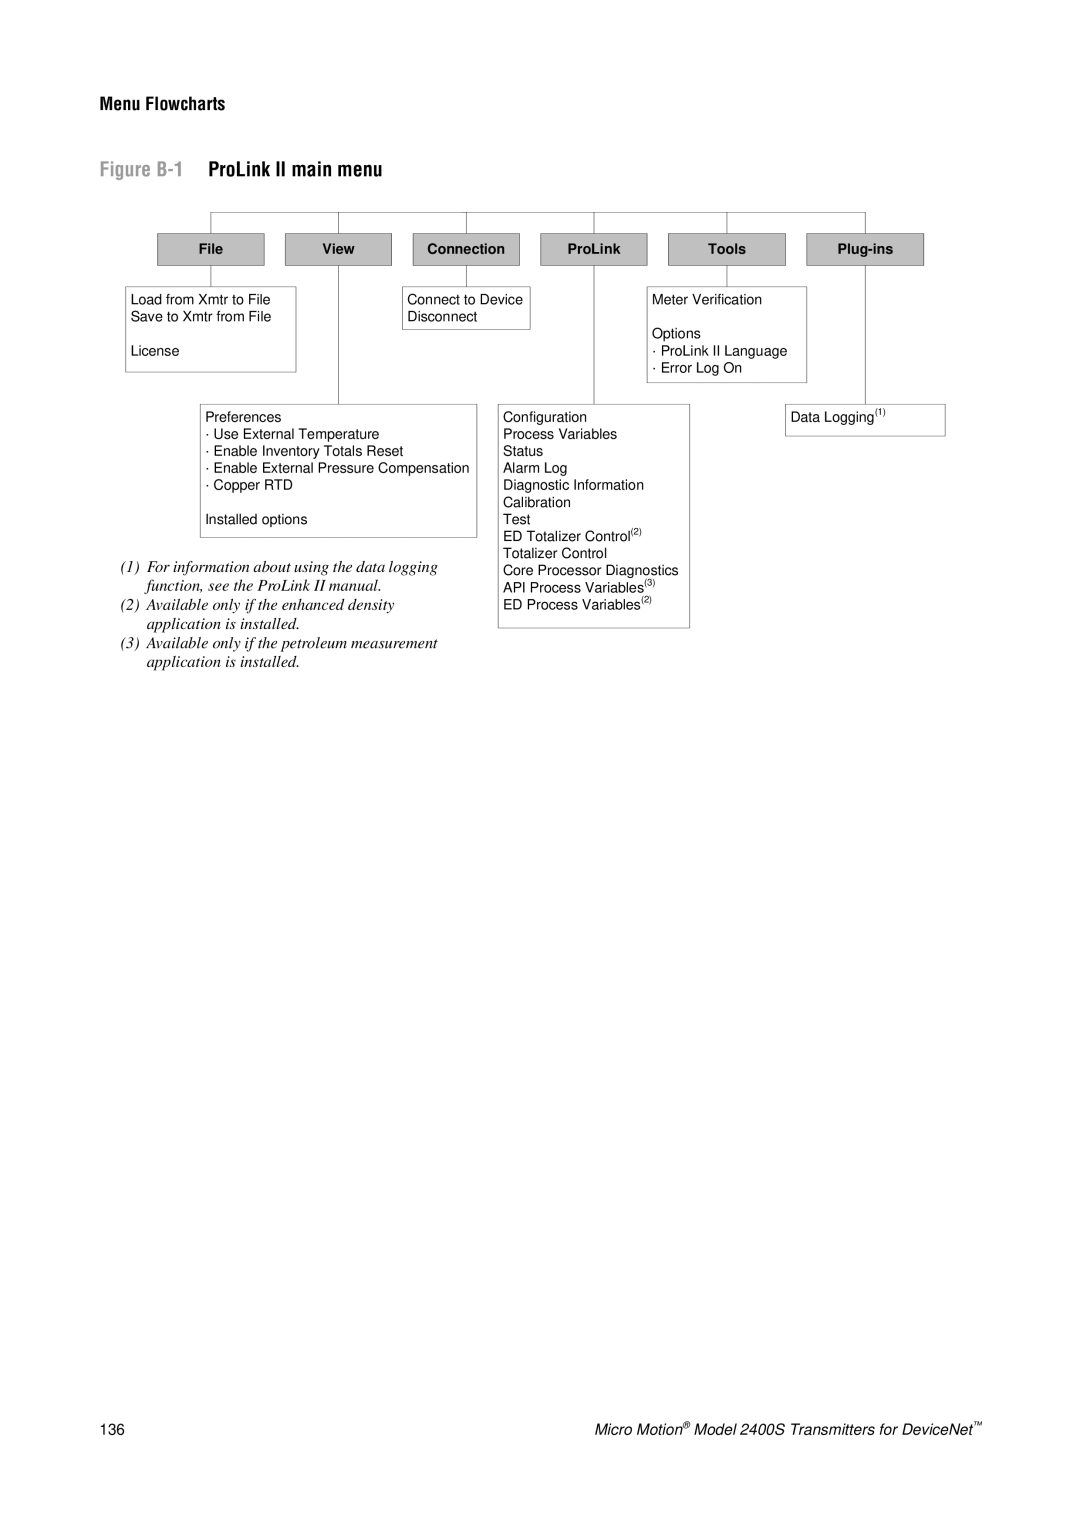 Emerson Process Management 2400S manual Figure B-1 ProLink II main menu, Menu Flowcharts 